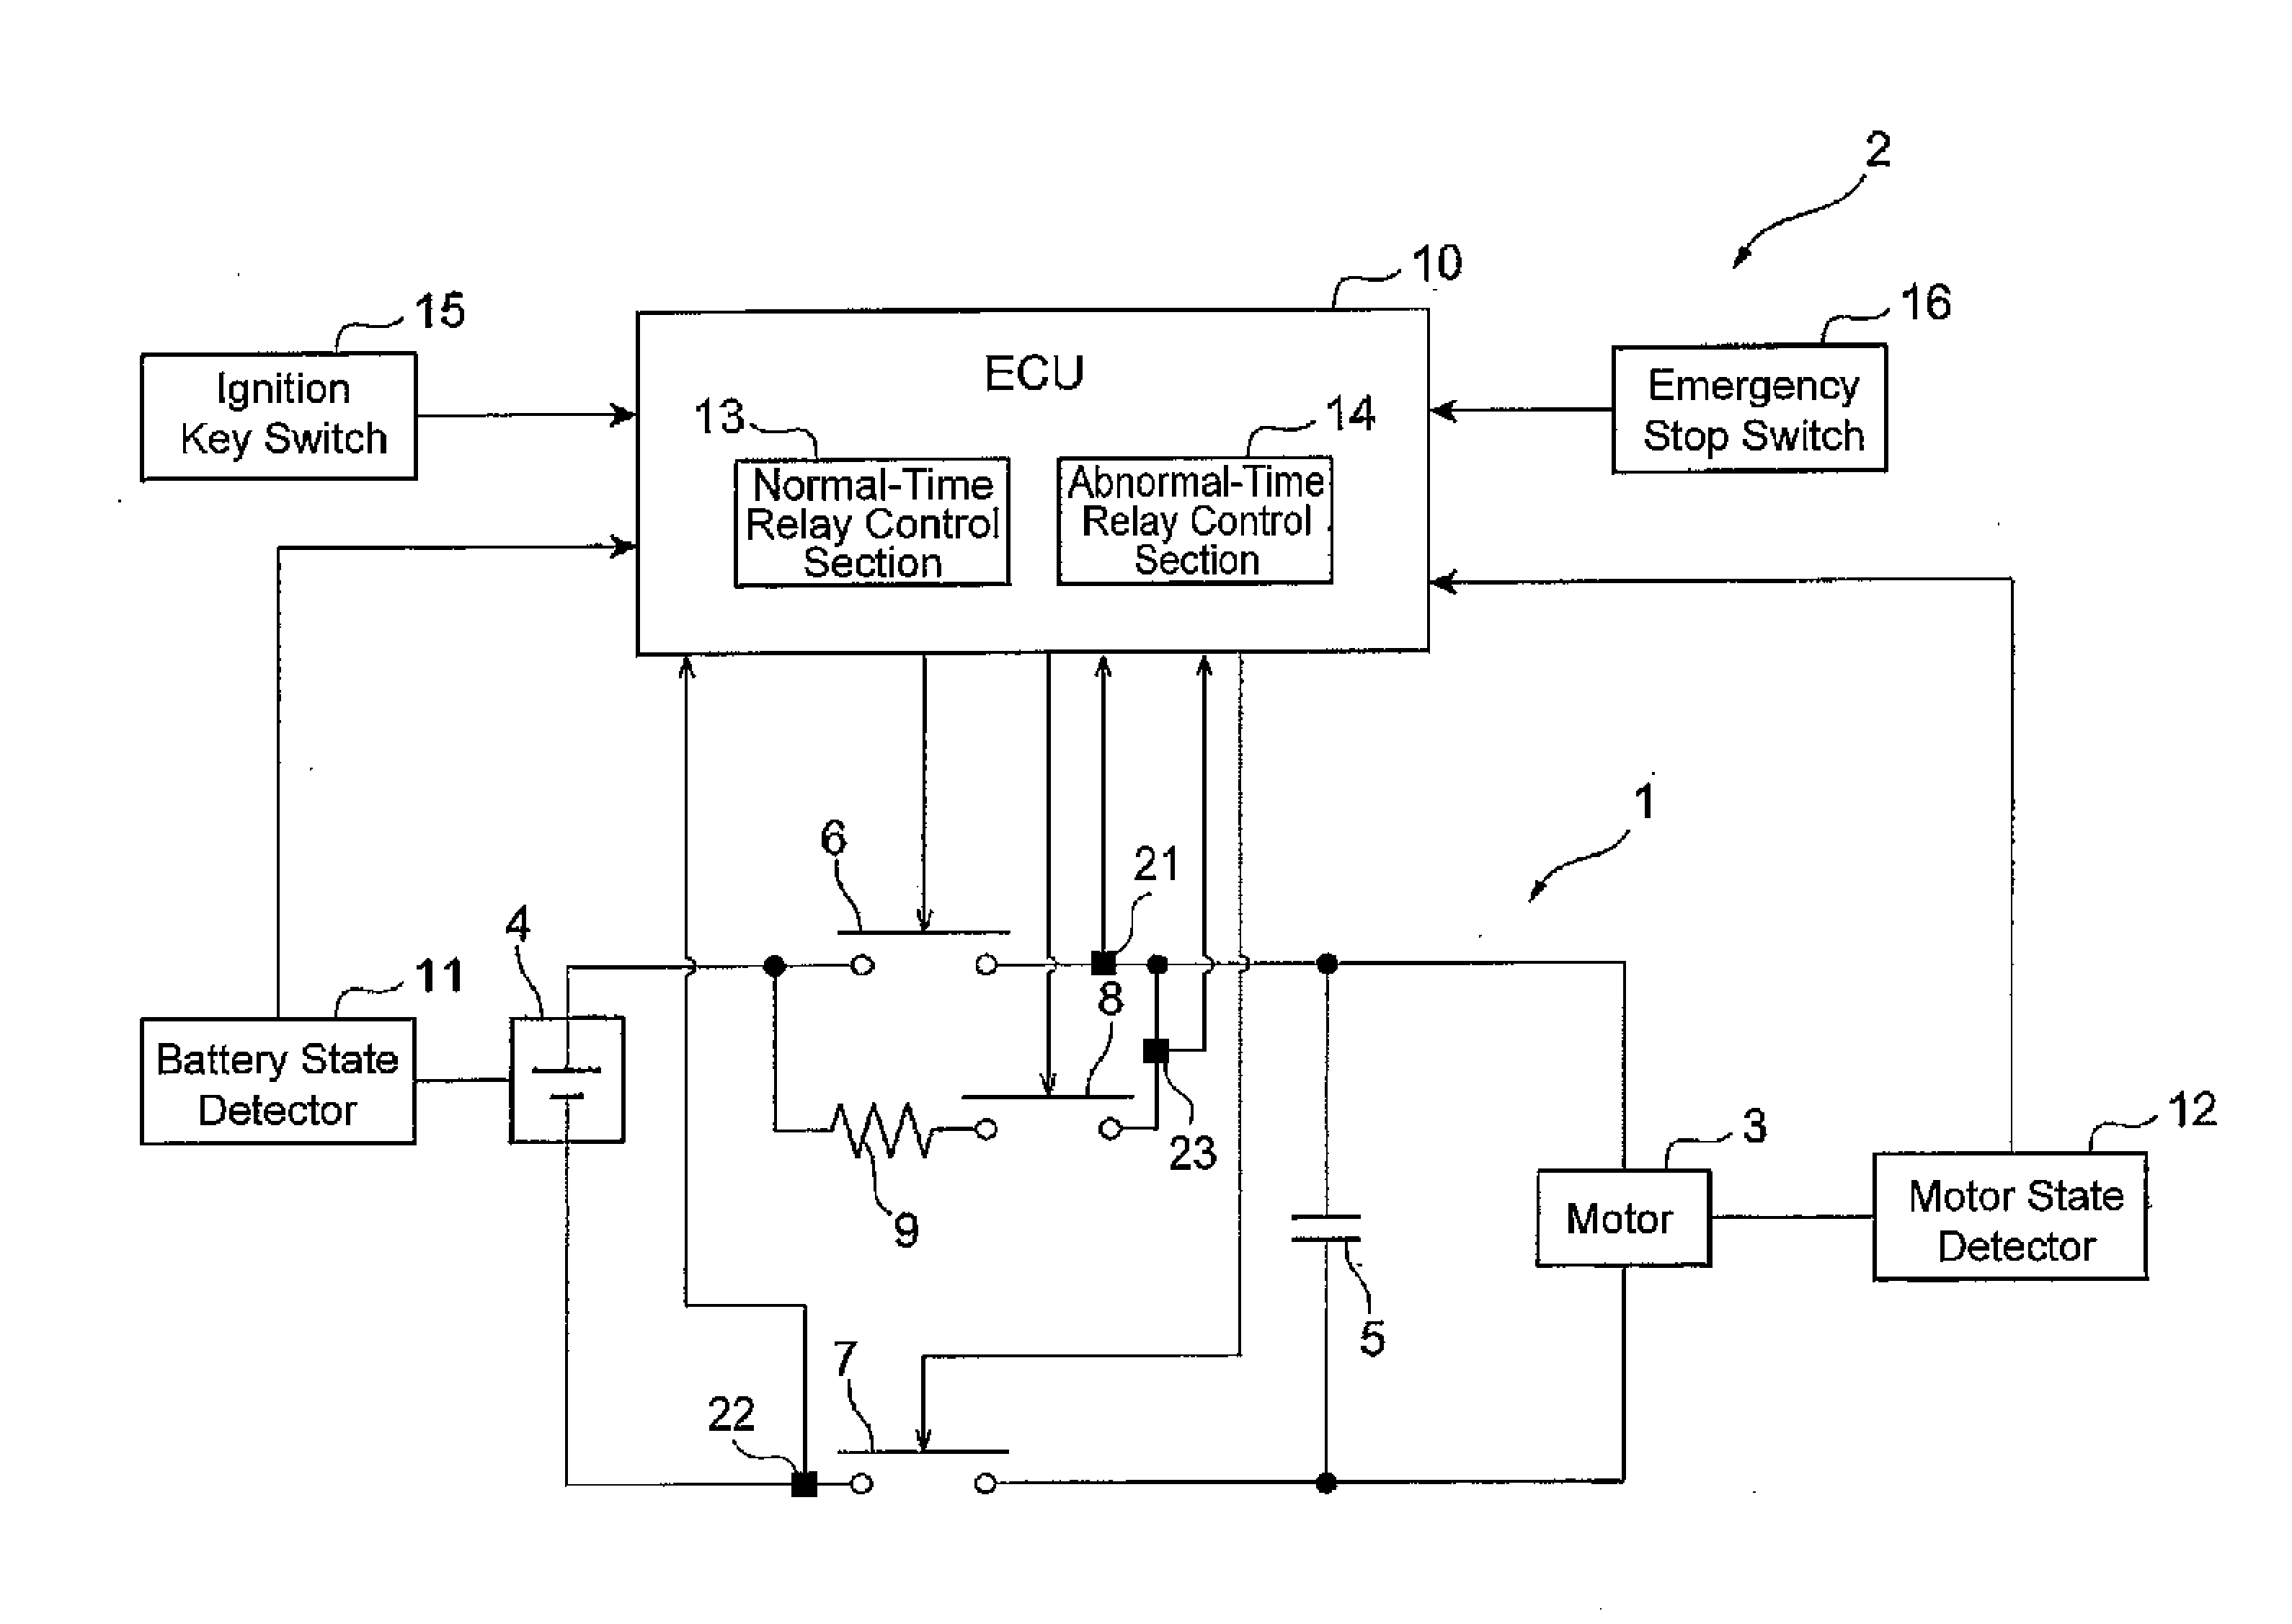 Power supply control apparatus